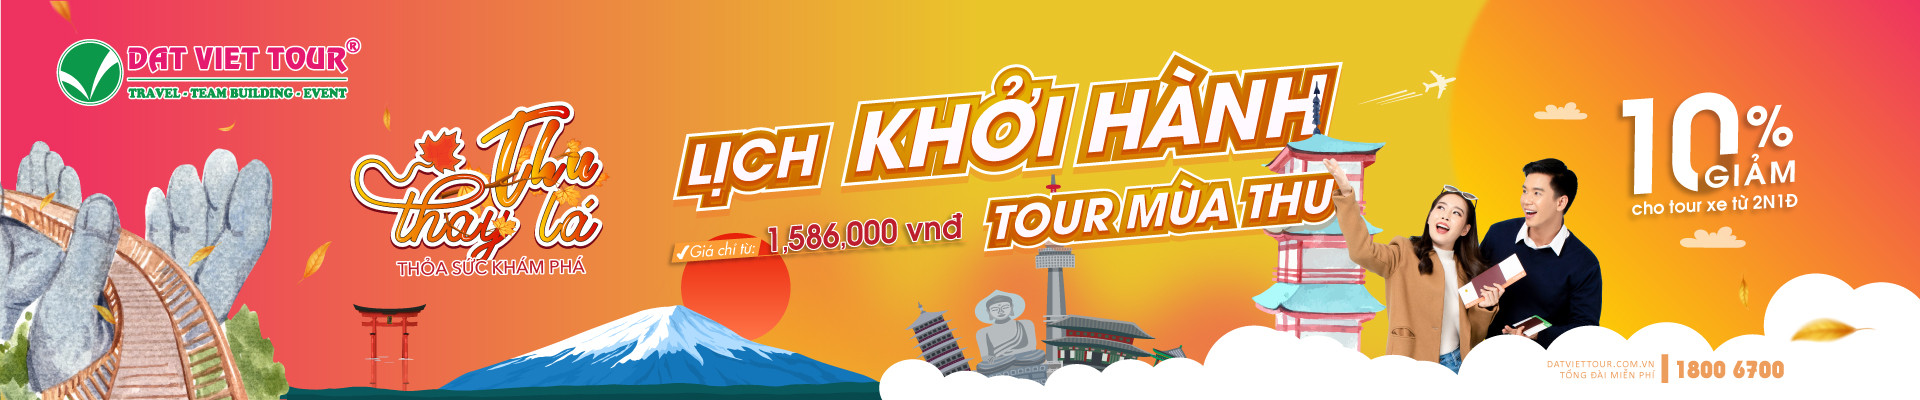 lich-khoi-hanh-he-dat-viet-tour